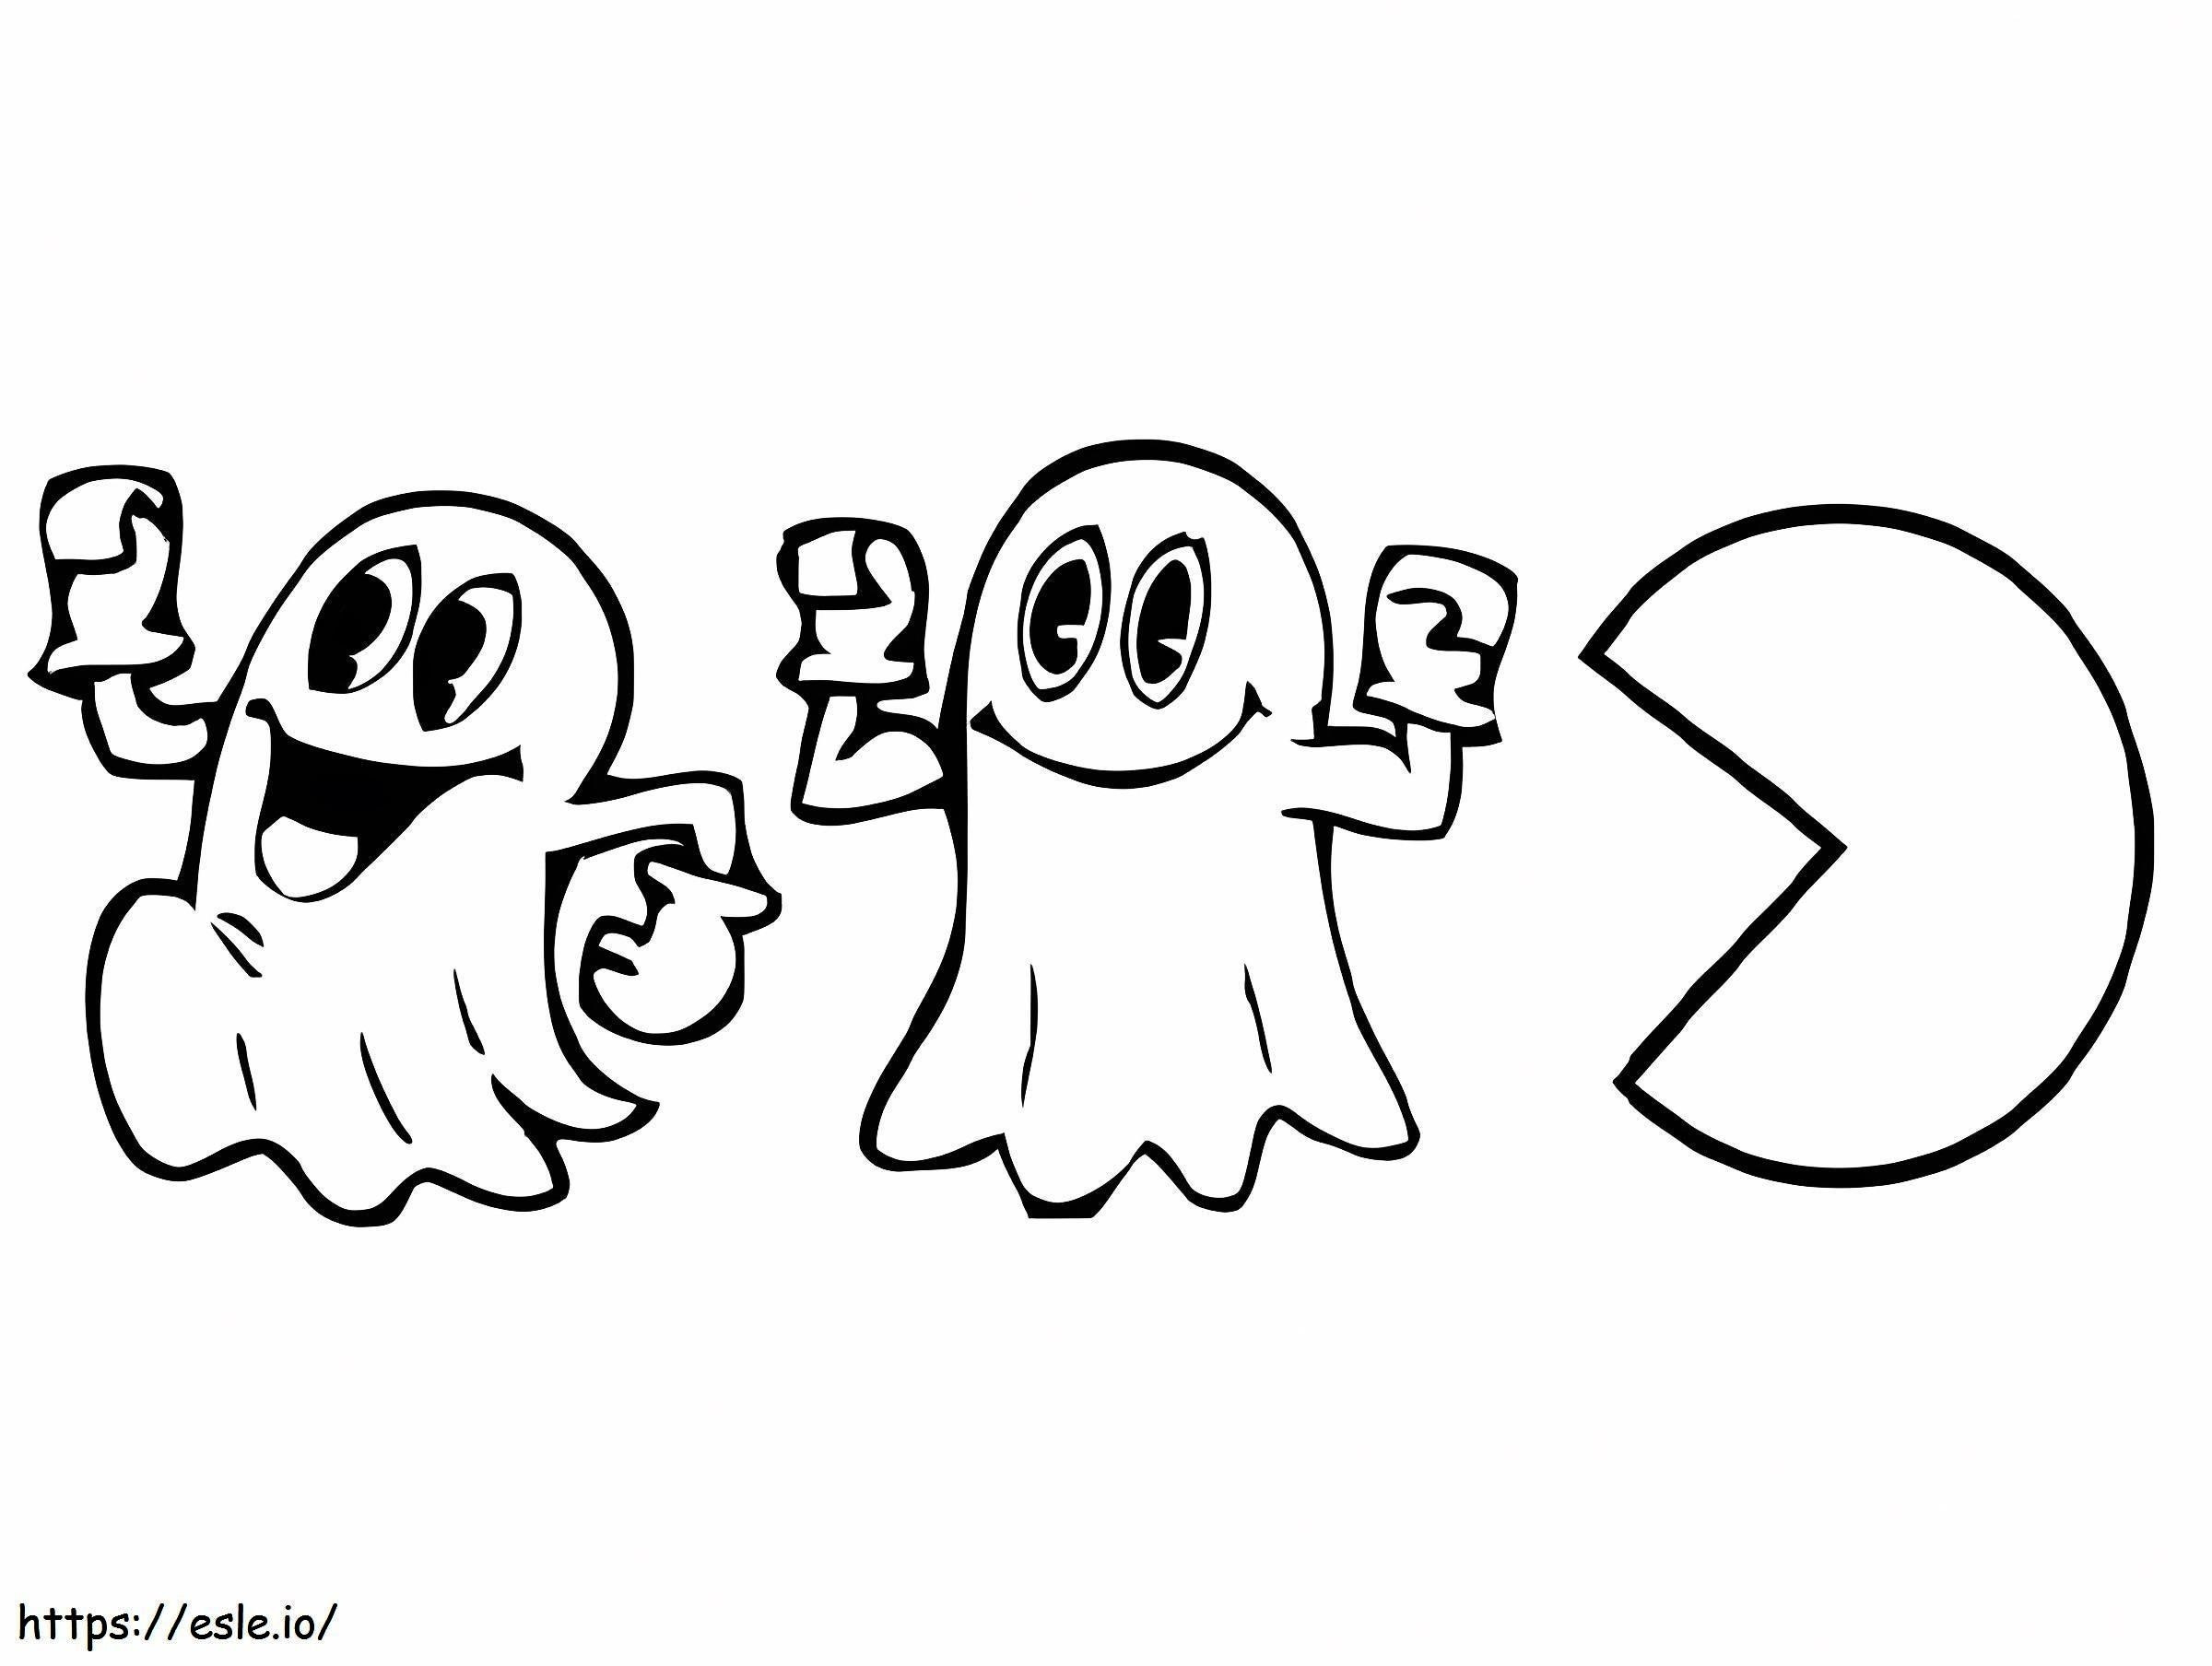 Pacman mangia due fantasmi da colorare